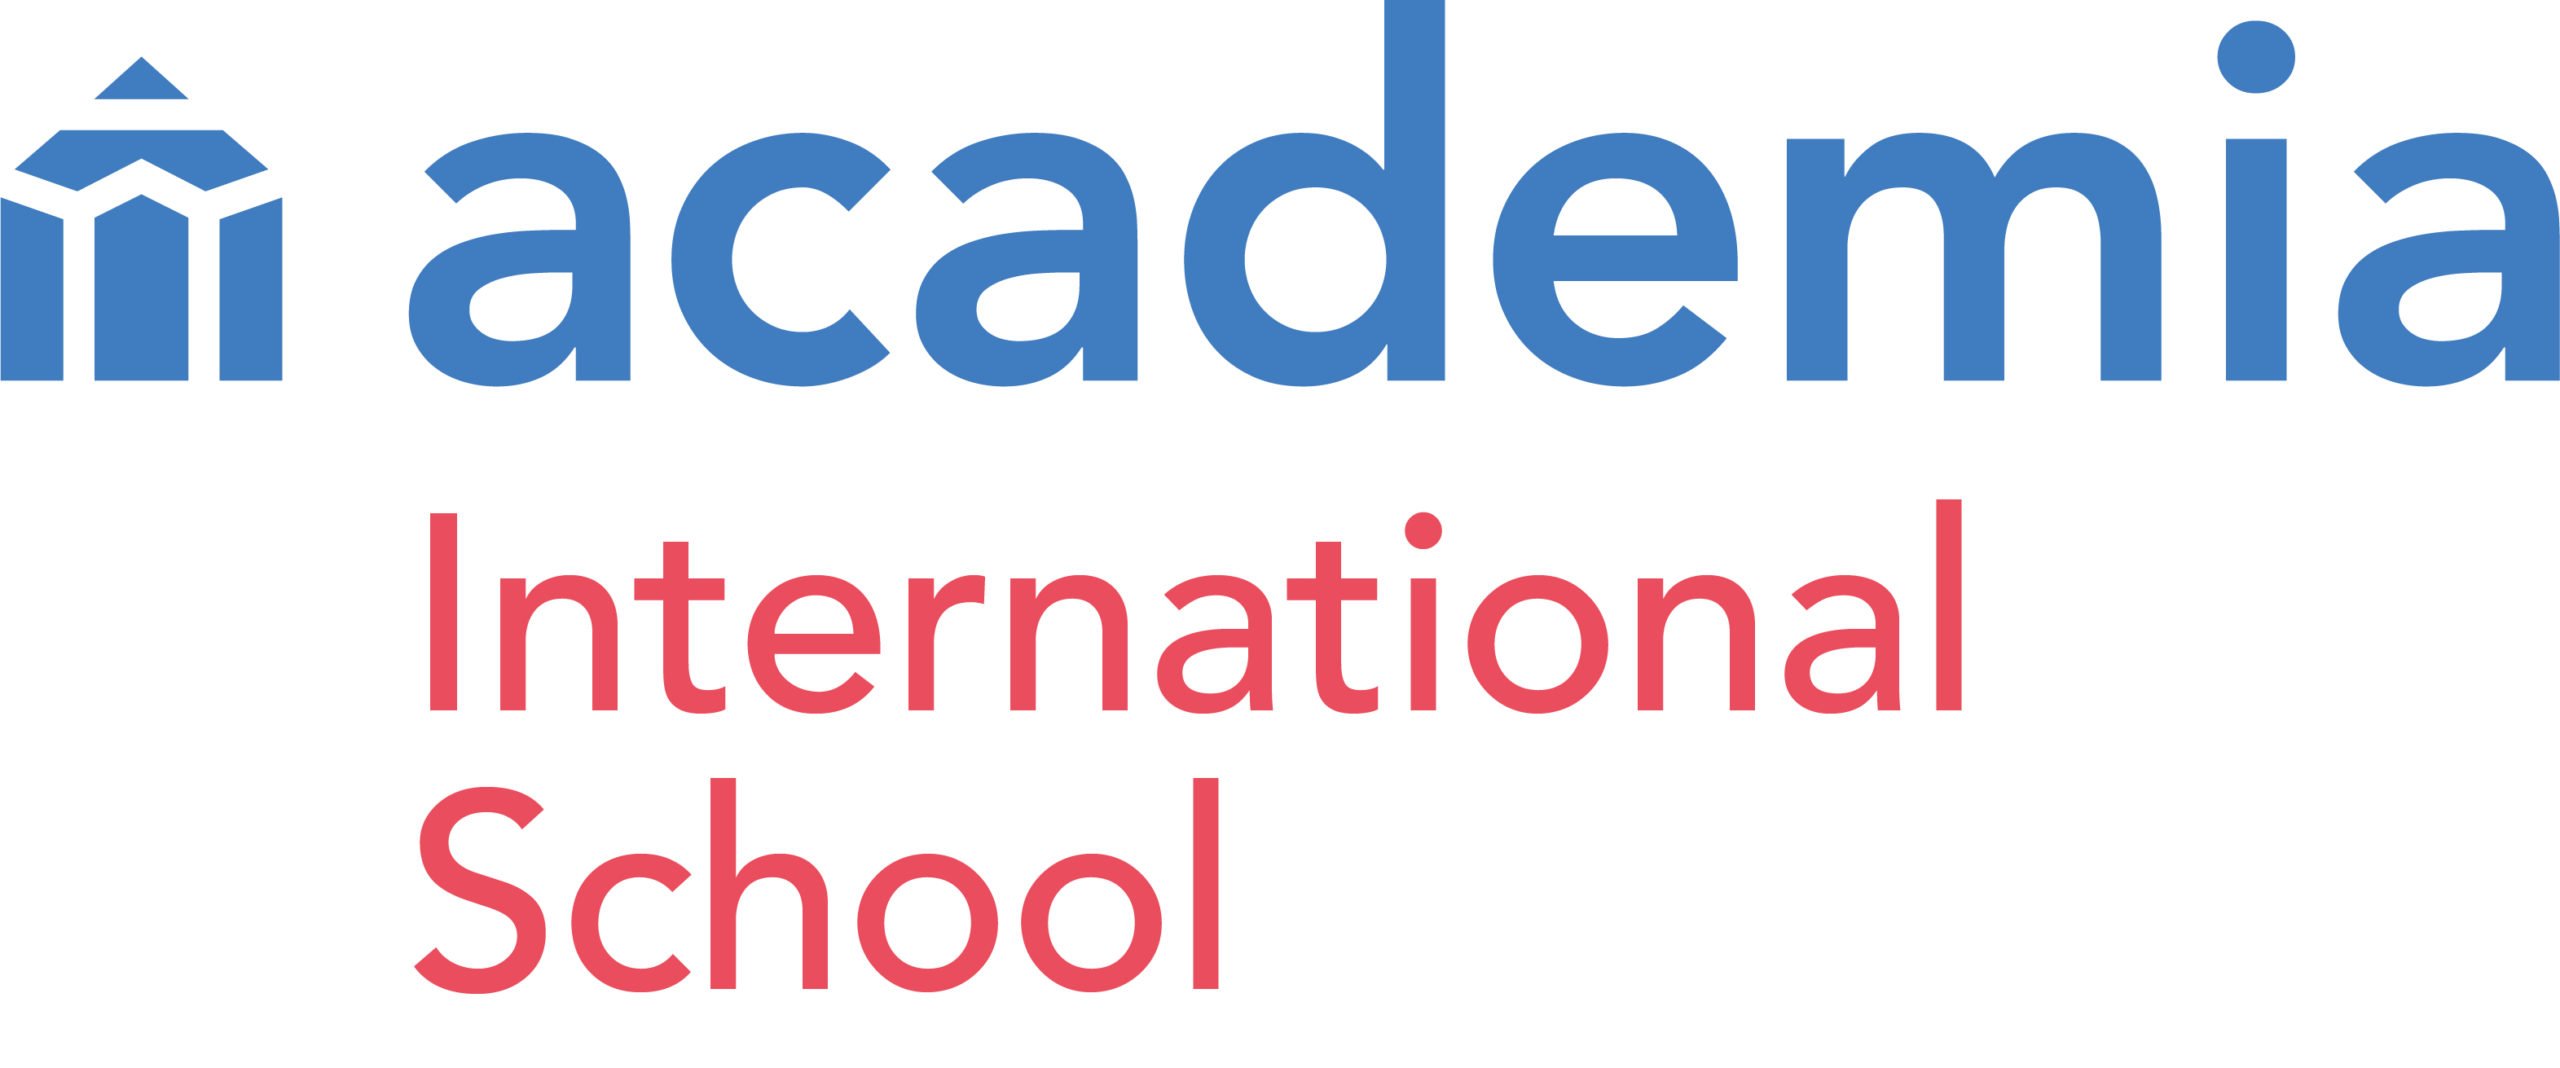 Academia International School